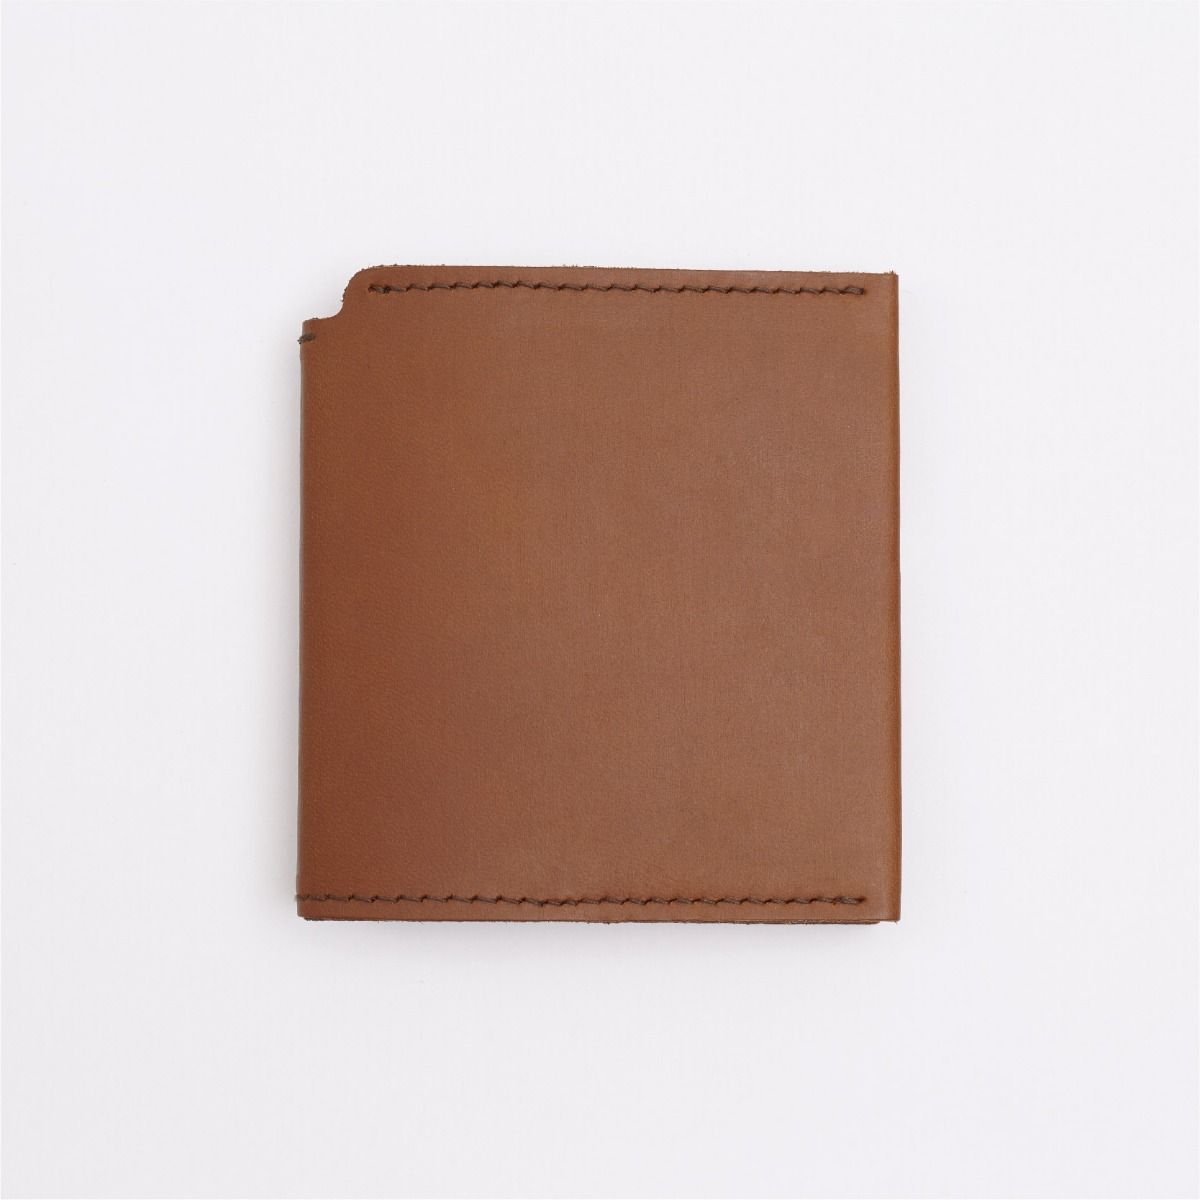 LAA151 Clip wallet